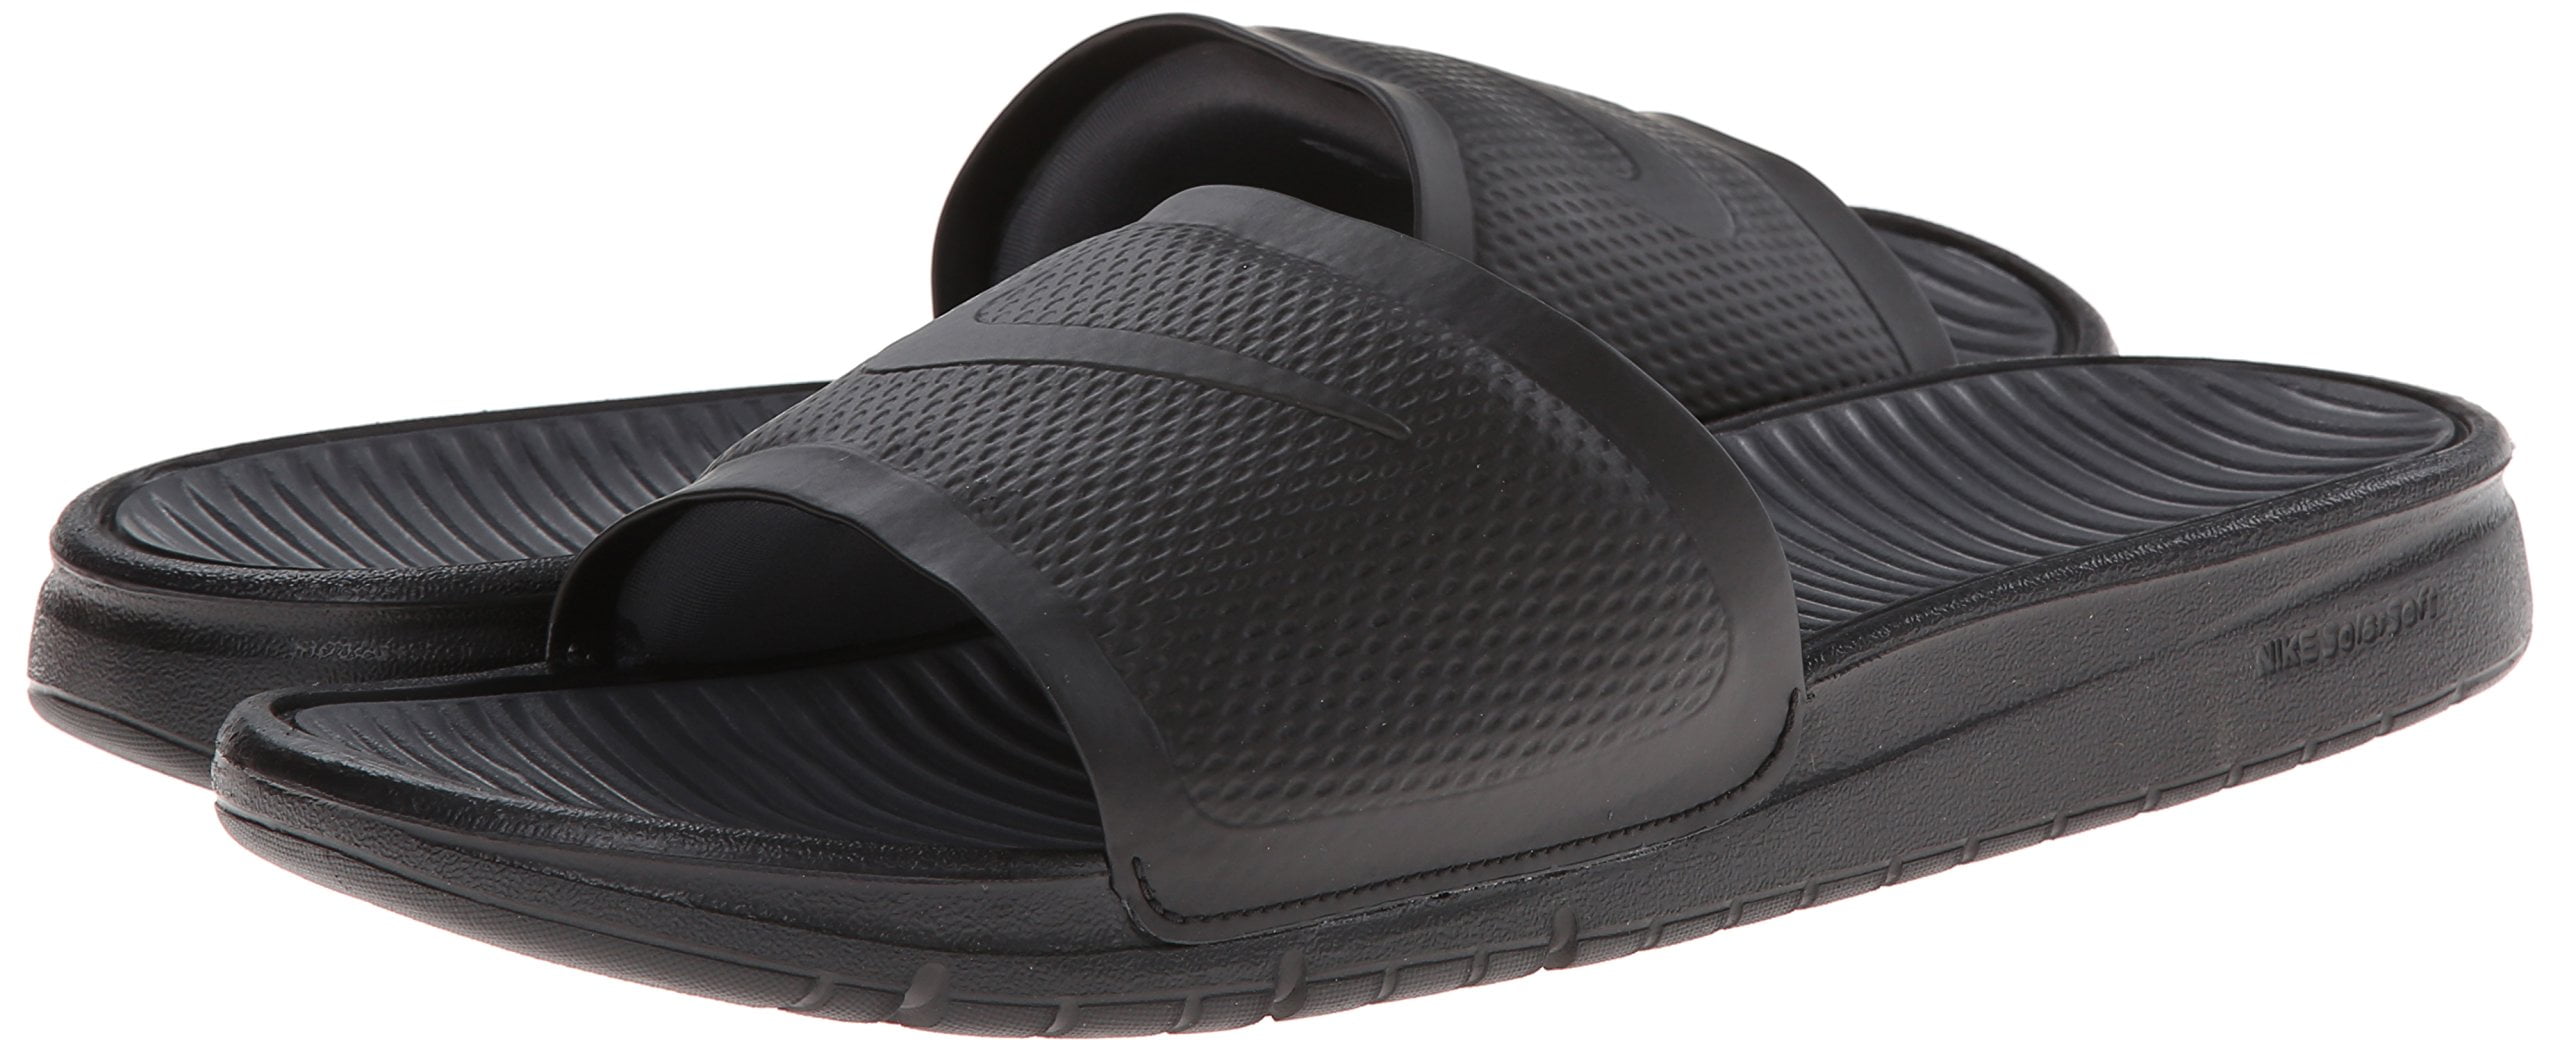 Desplazamiento rodillo Viaje Nike Men's Benassi Solarsoft Slide Sandal (8 D(M) US, BLACK/DARK  GREY//BLACK) - Walmart.com